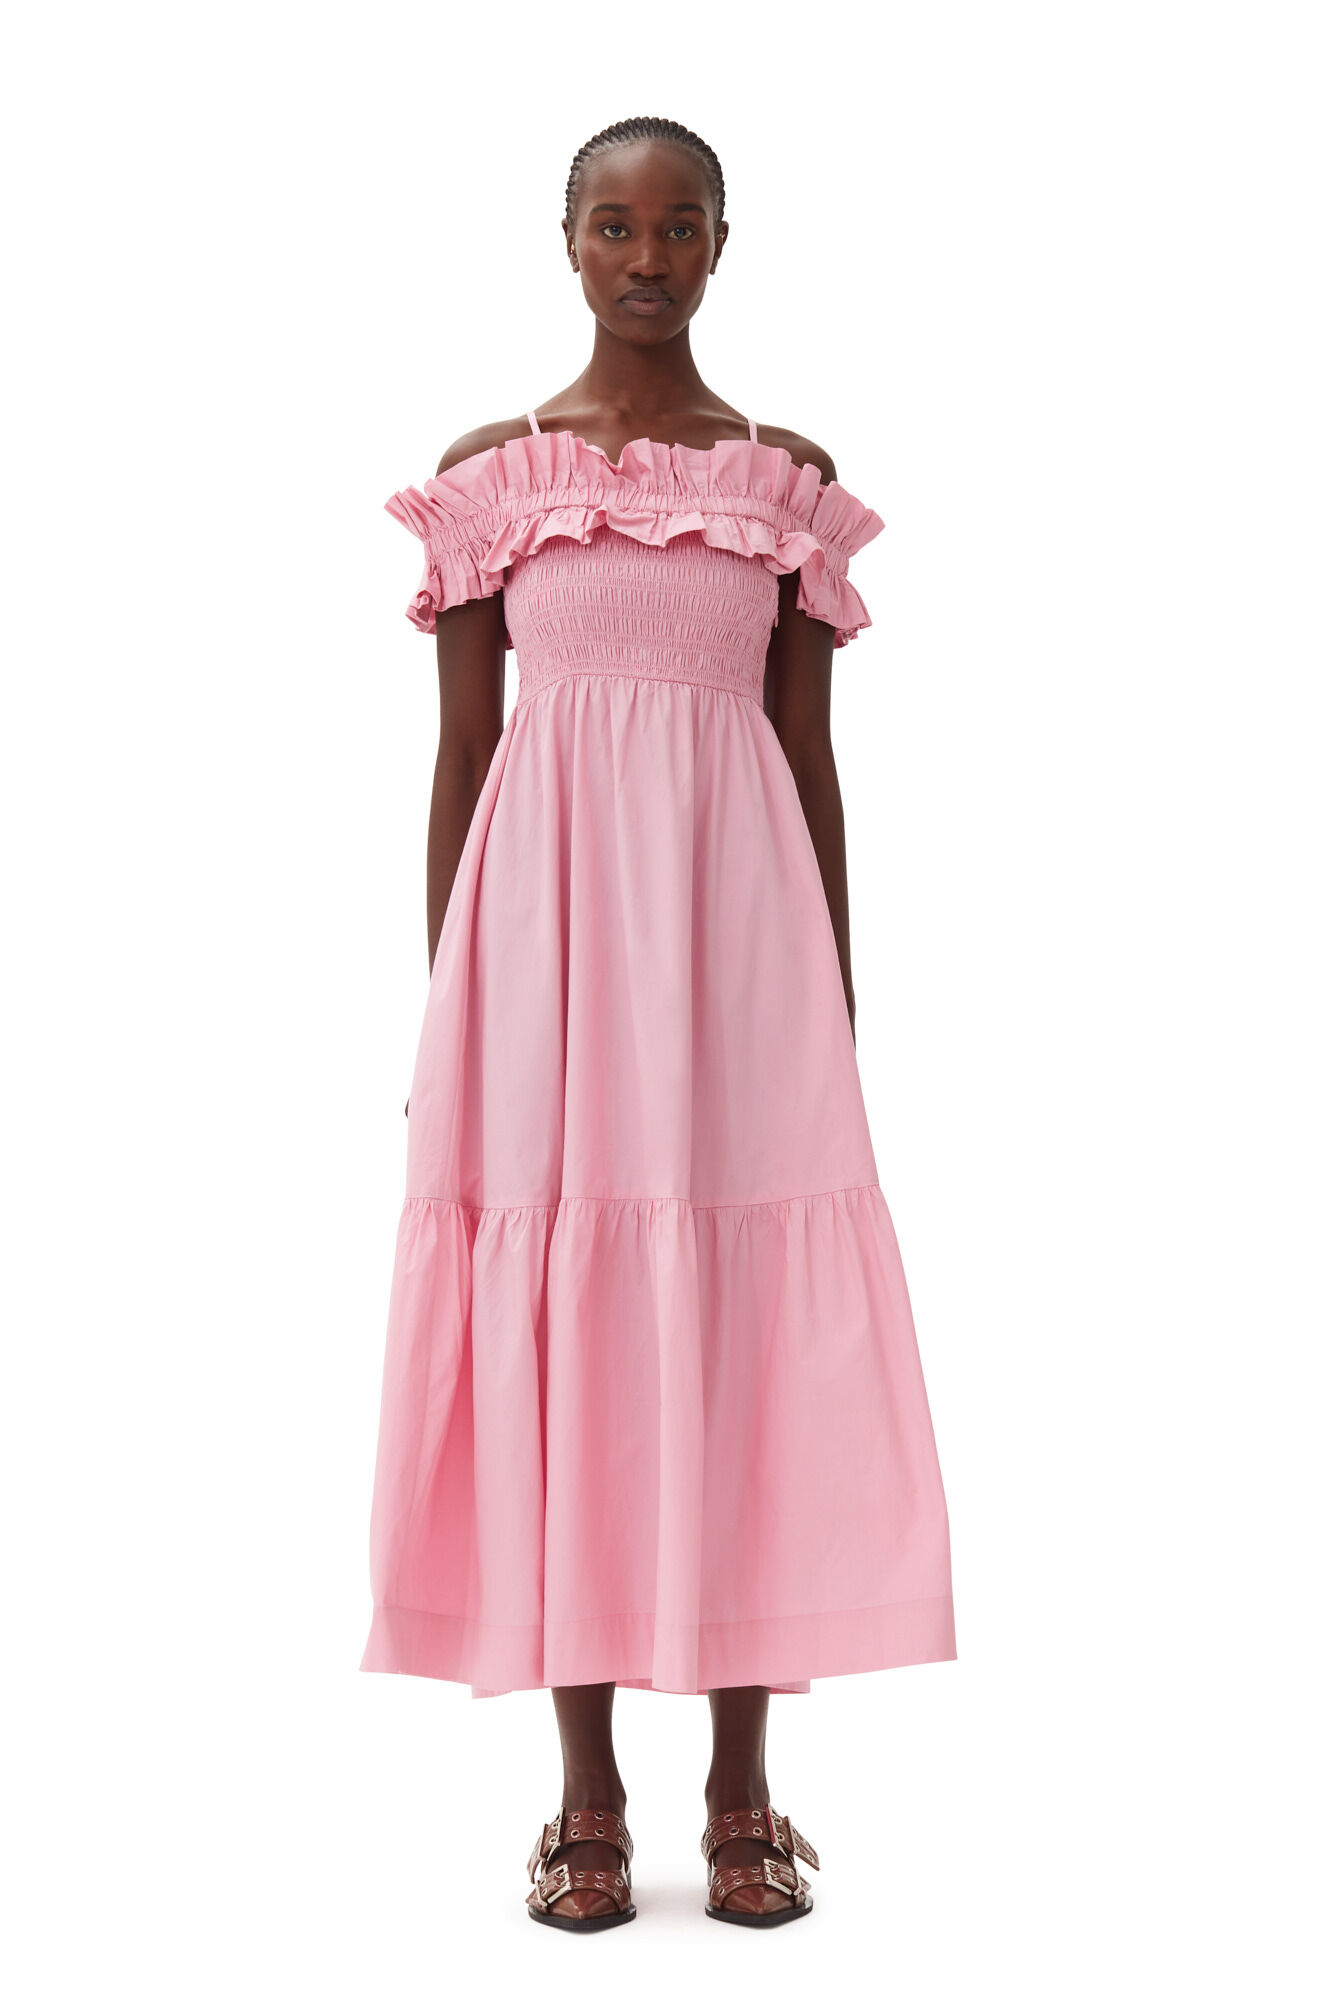 pink smock dress